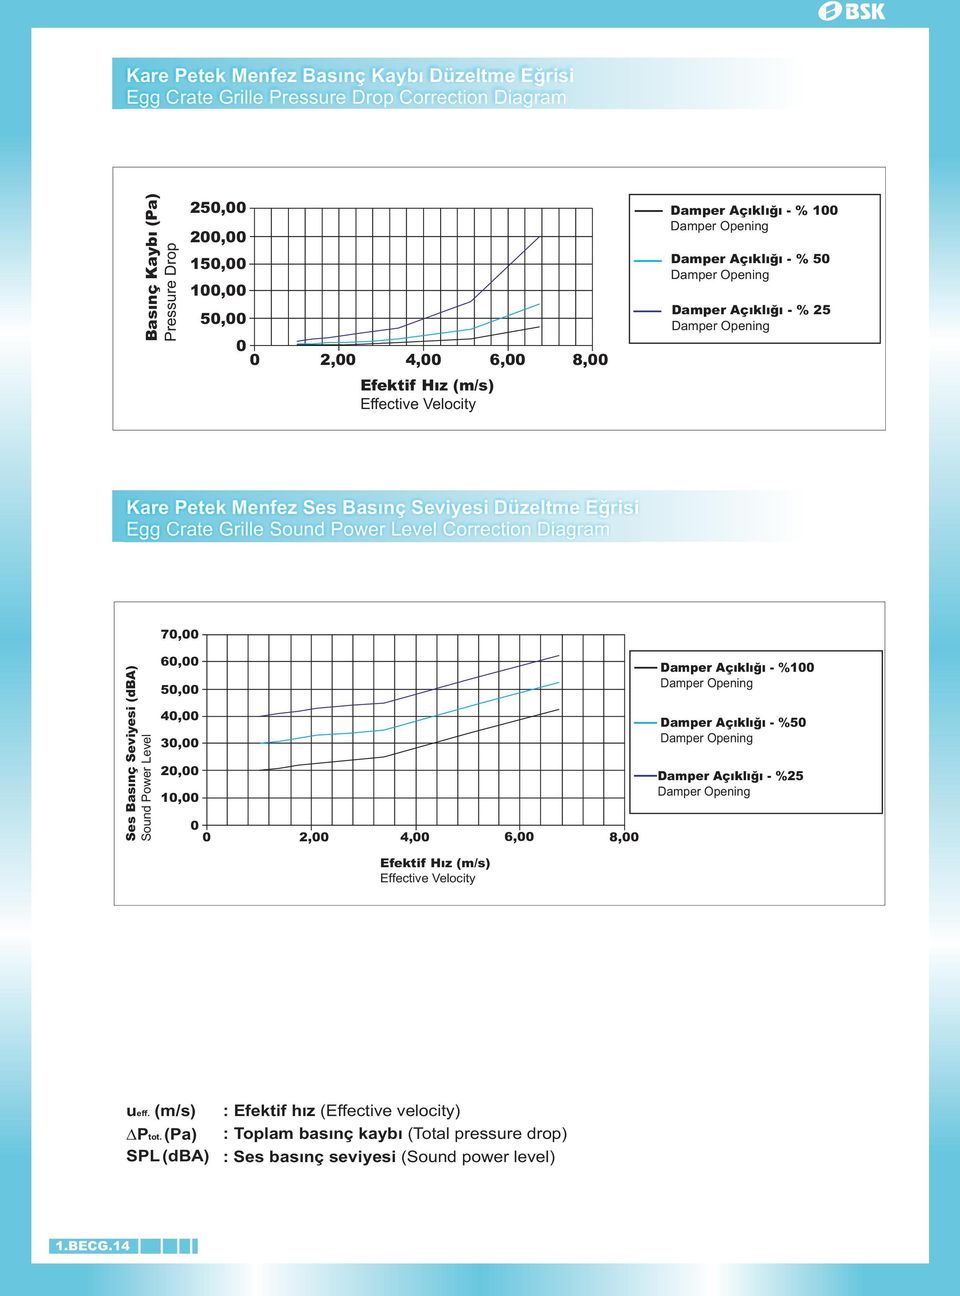 Crate Grille Sound Power Level Correction Diagram 70,00 Ses Basýnç Seviyesi (dba) Sound Power Level 60,00 50,00 40,00 30,00 20,00 10,00 0 0 2,00 4,00 6,00 8,00 Efektif Hýz (m/s) Effective Velocity